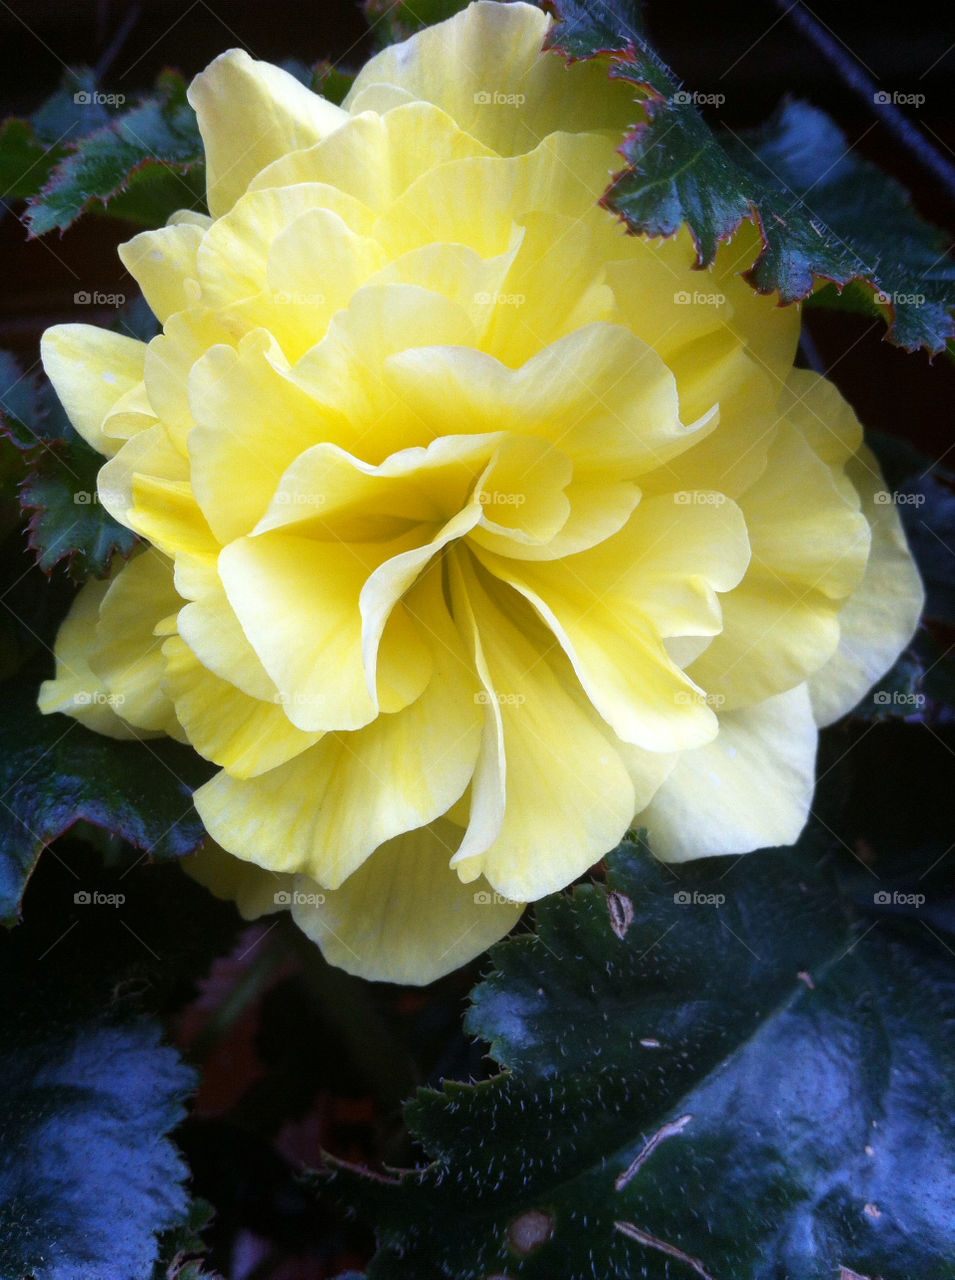 celestial yellow magnific flower nice garden by alejin05